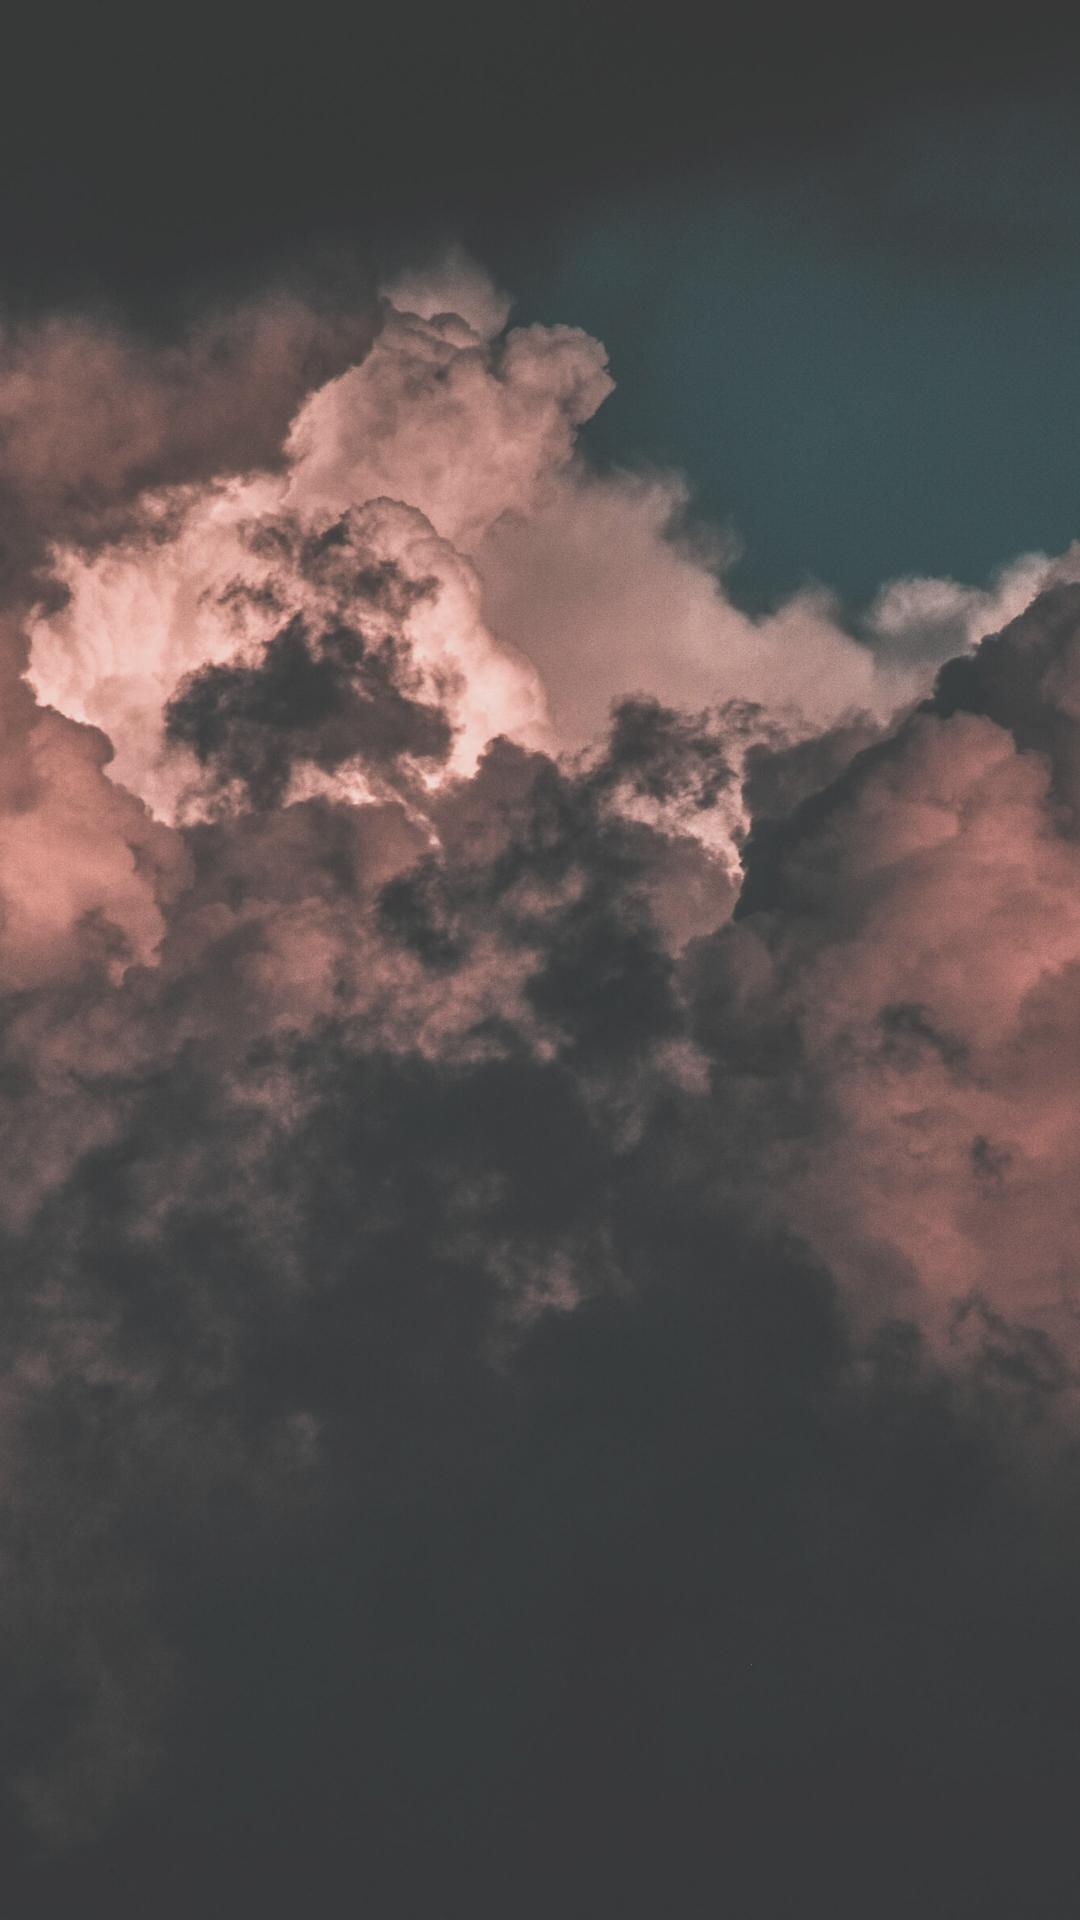 Clouds in the sky, wallpaper, 1080x1920, iPhone 8, iPhone X - Dark academia